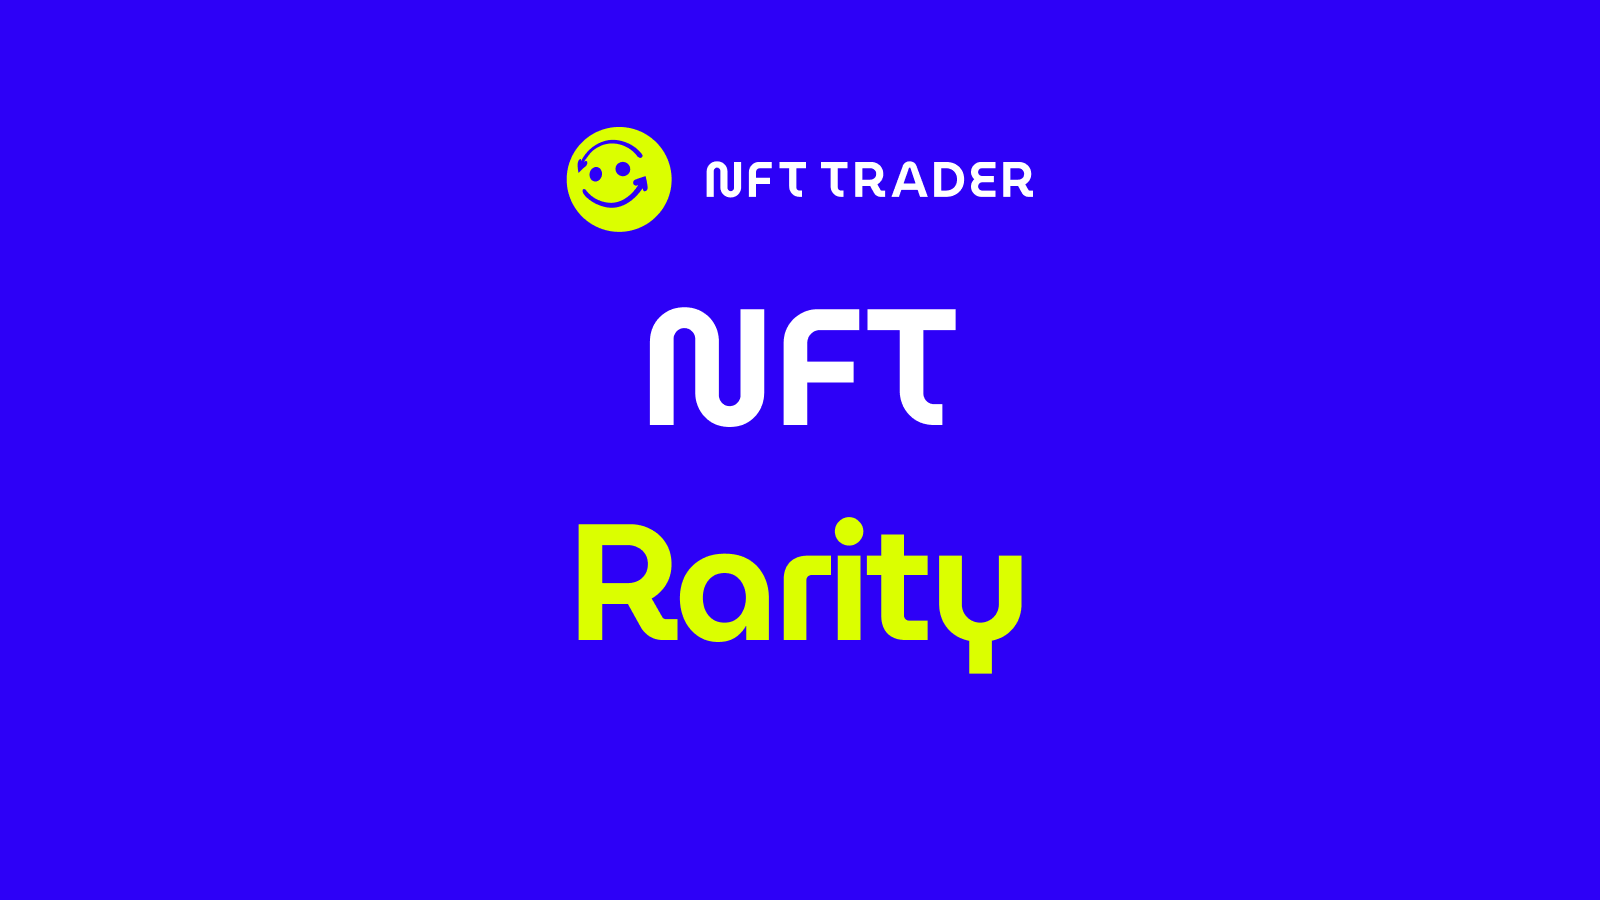 How to Determine NFT Rarity